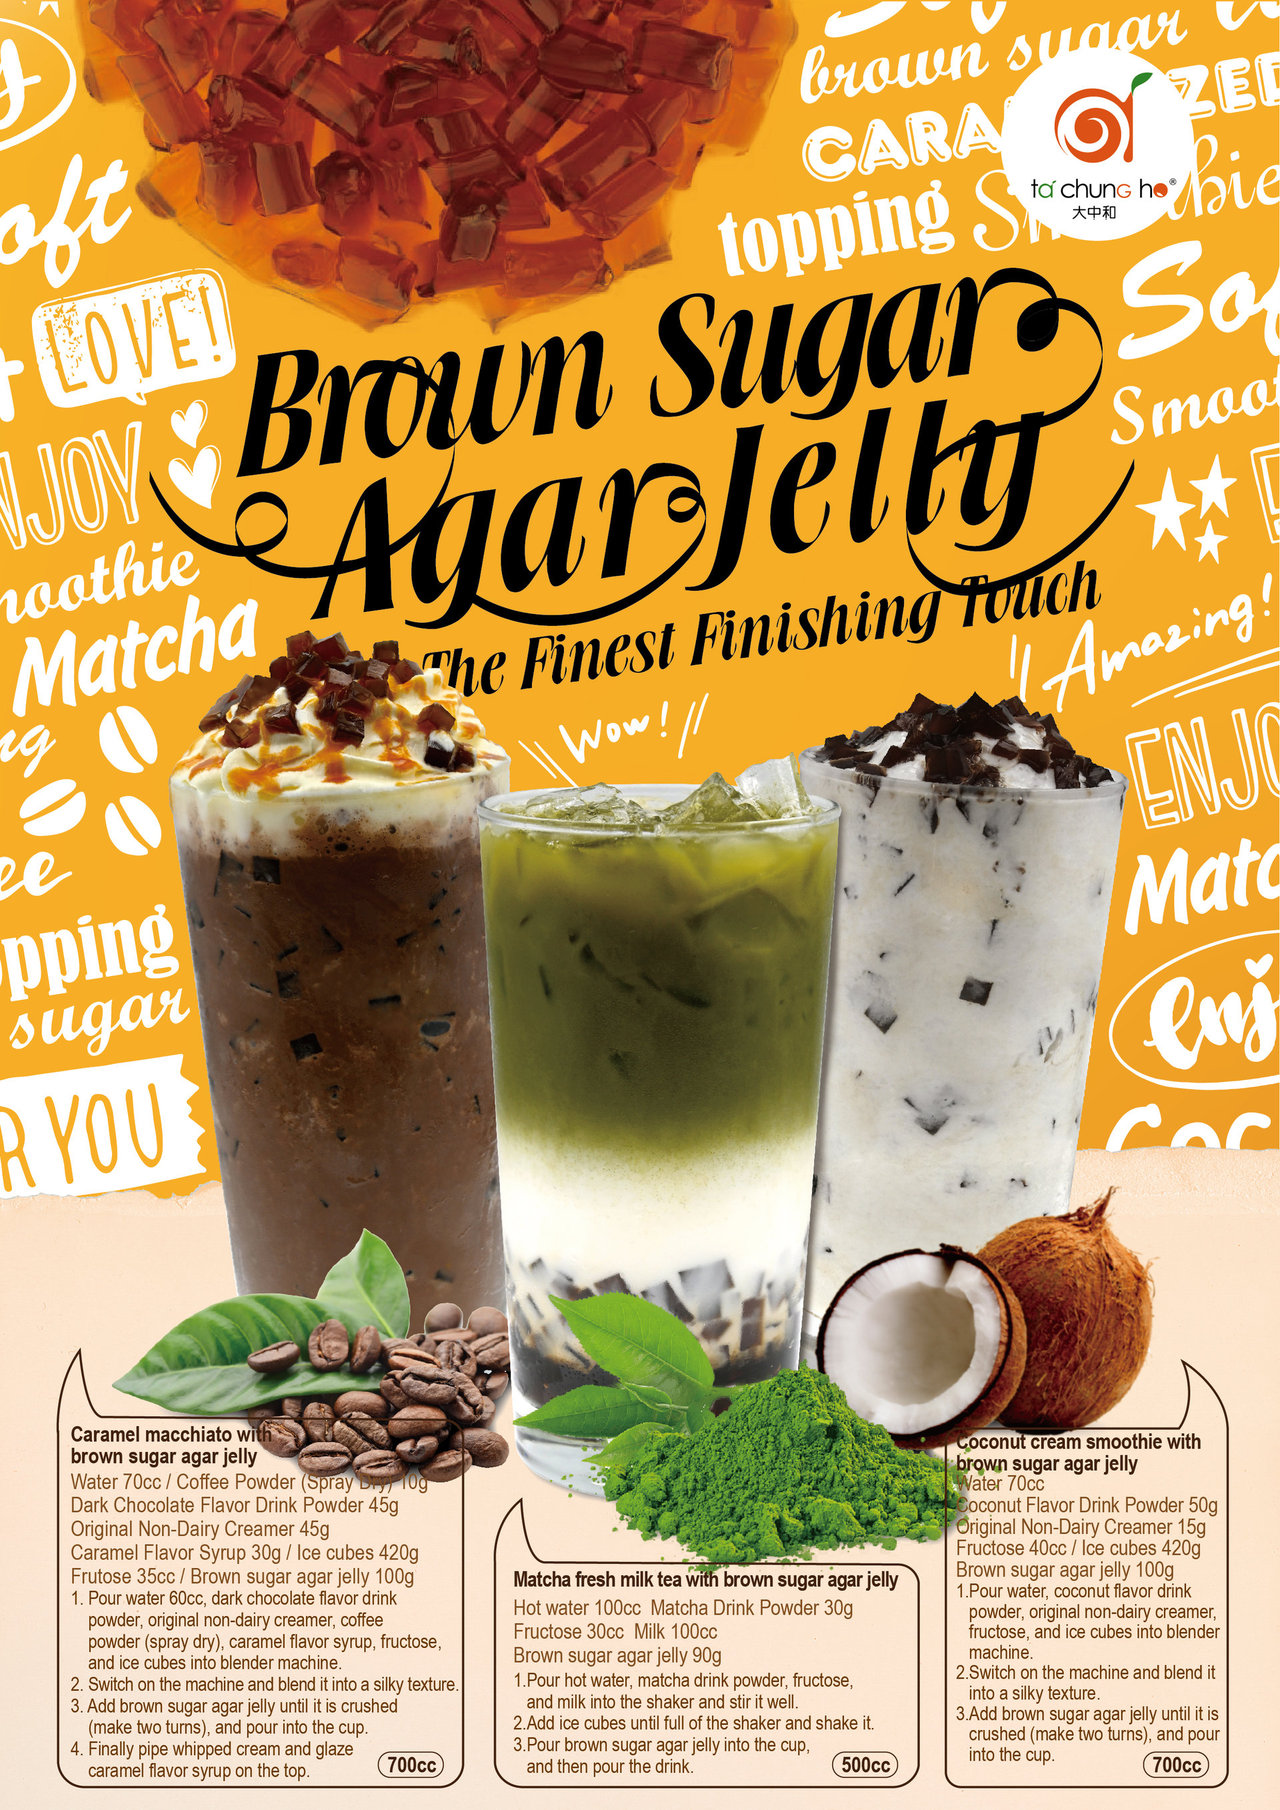 Matcha Bubble Tea with Brown Sugar